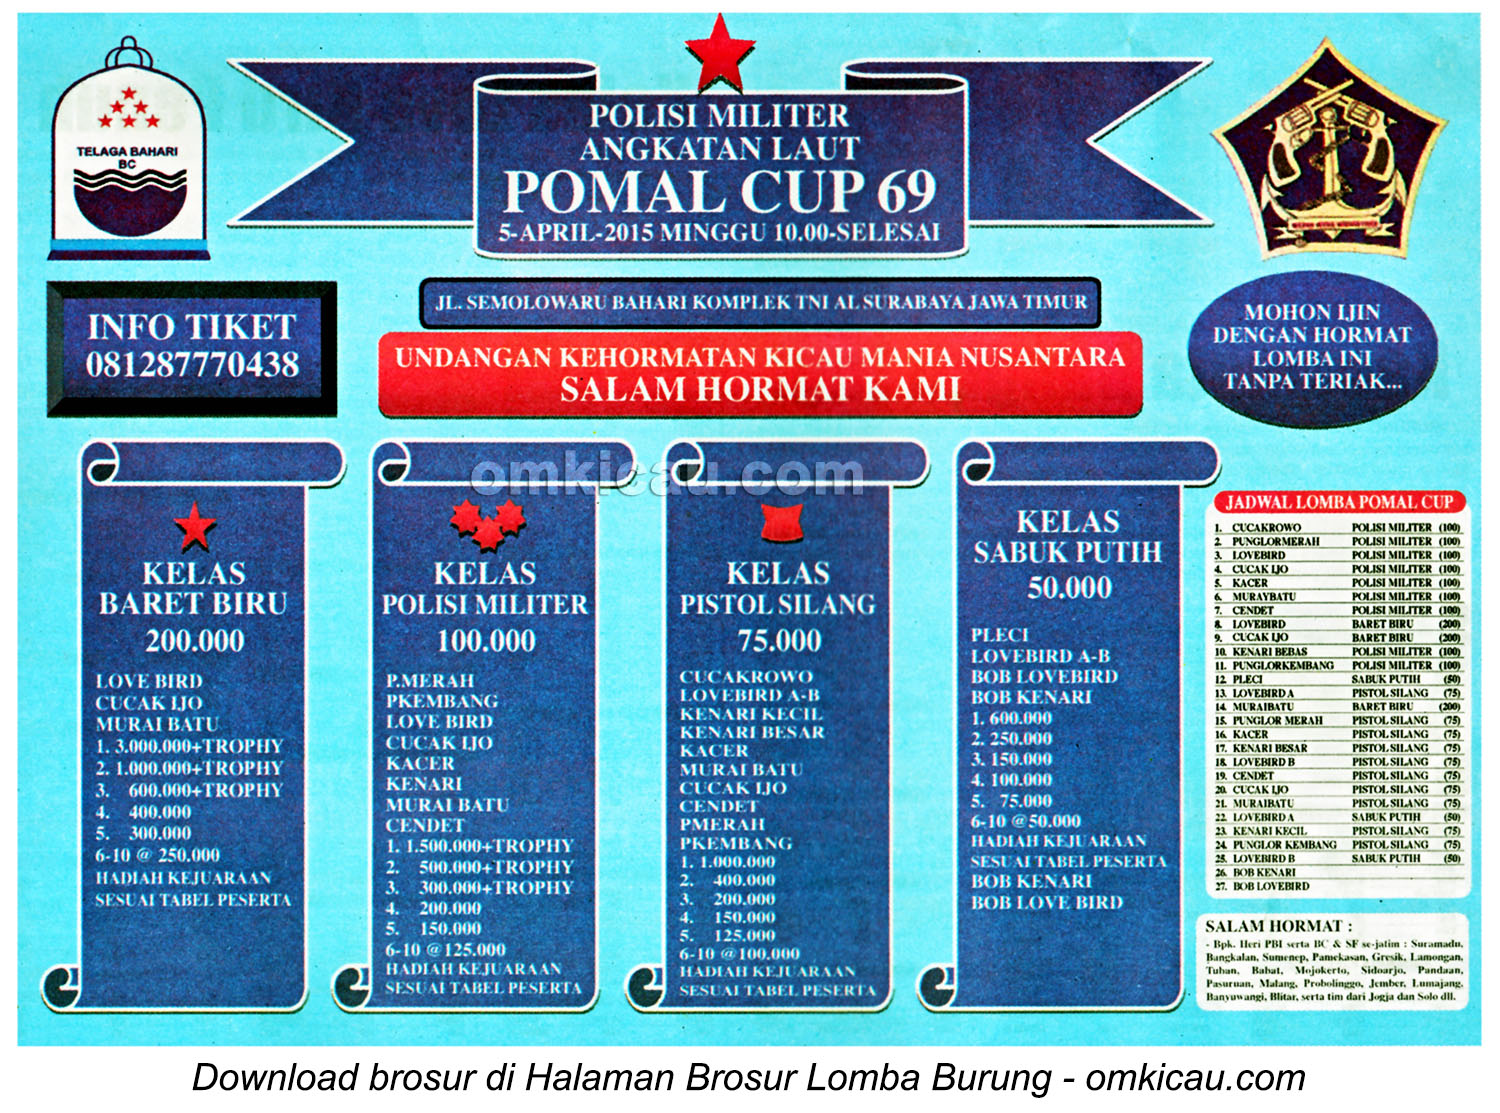 Brosur Lomba Burung Berkicau Pomal Cup 69 Surabaya, 5 April 2015